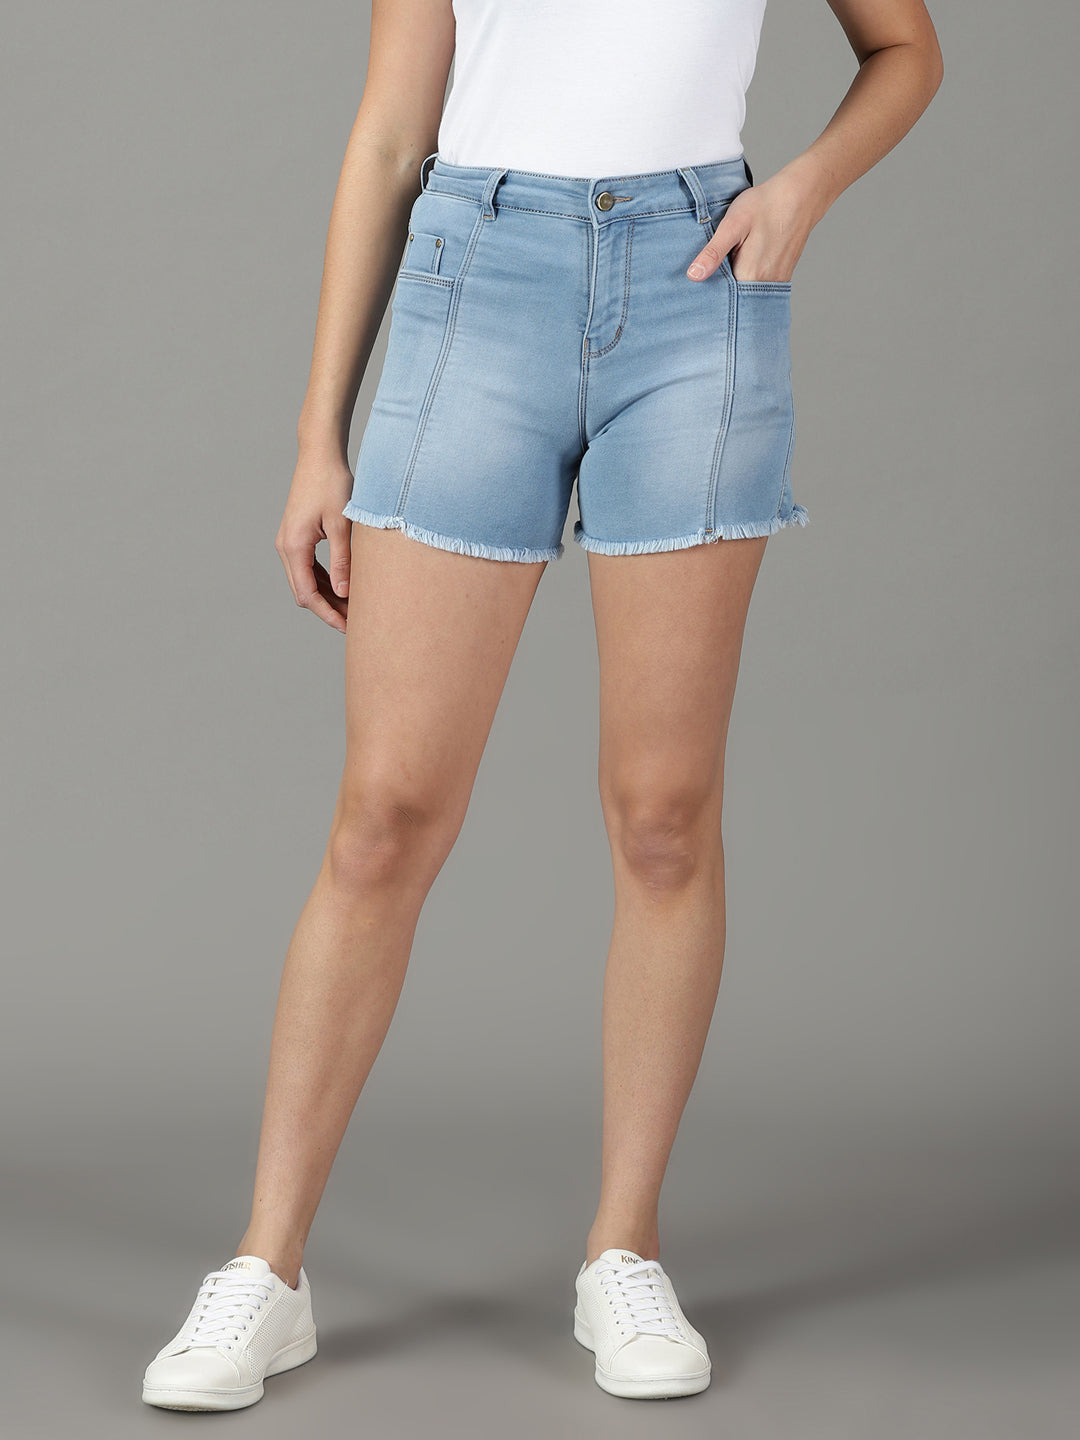 Women's Blue Solid Denim Shorts